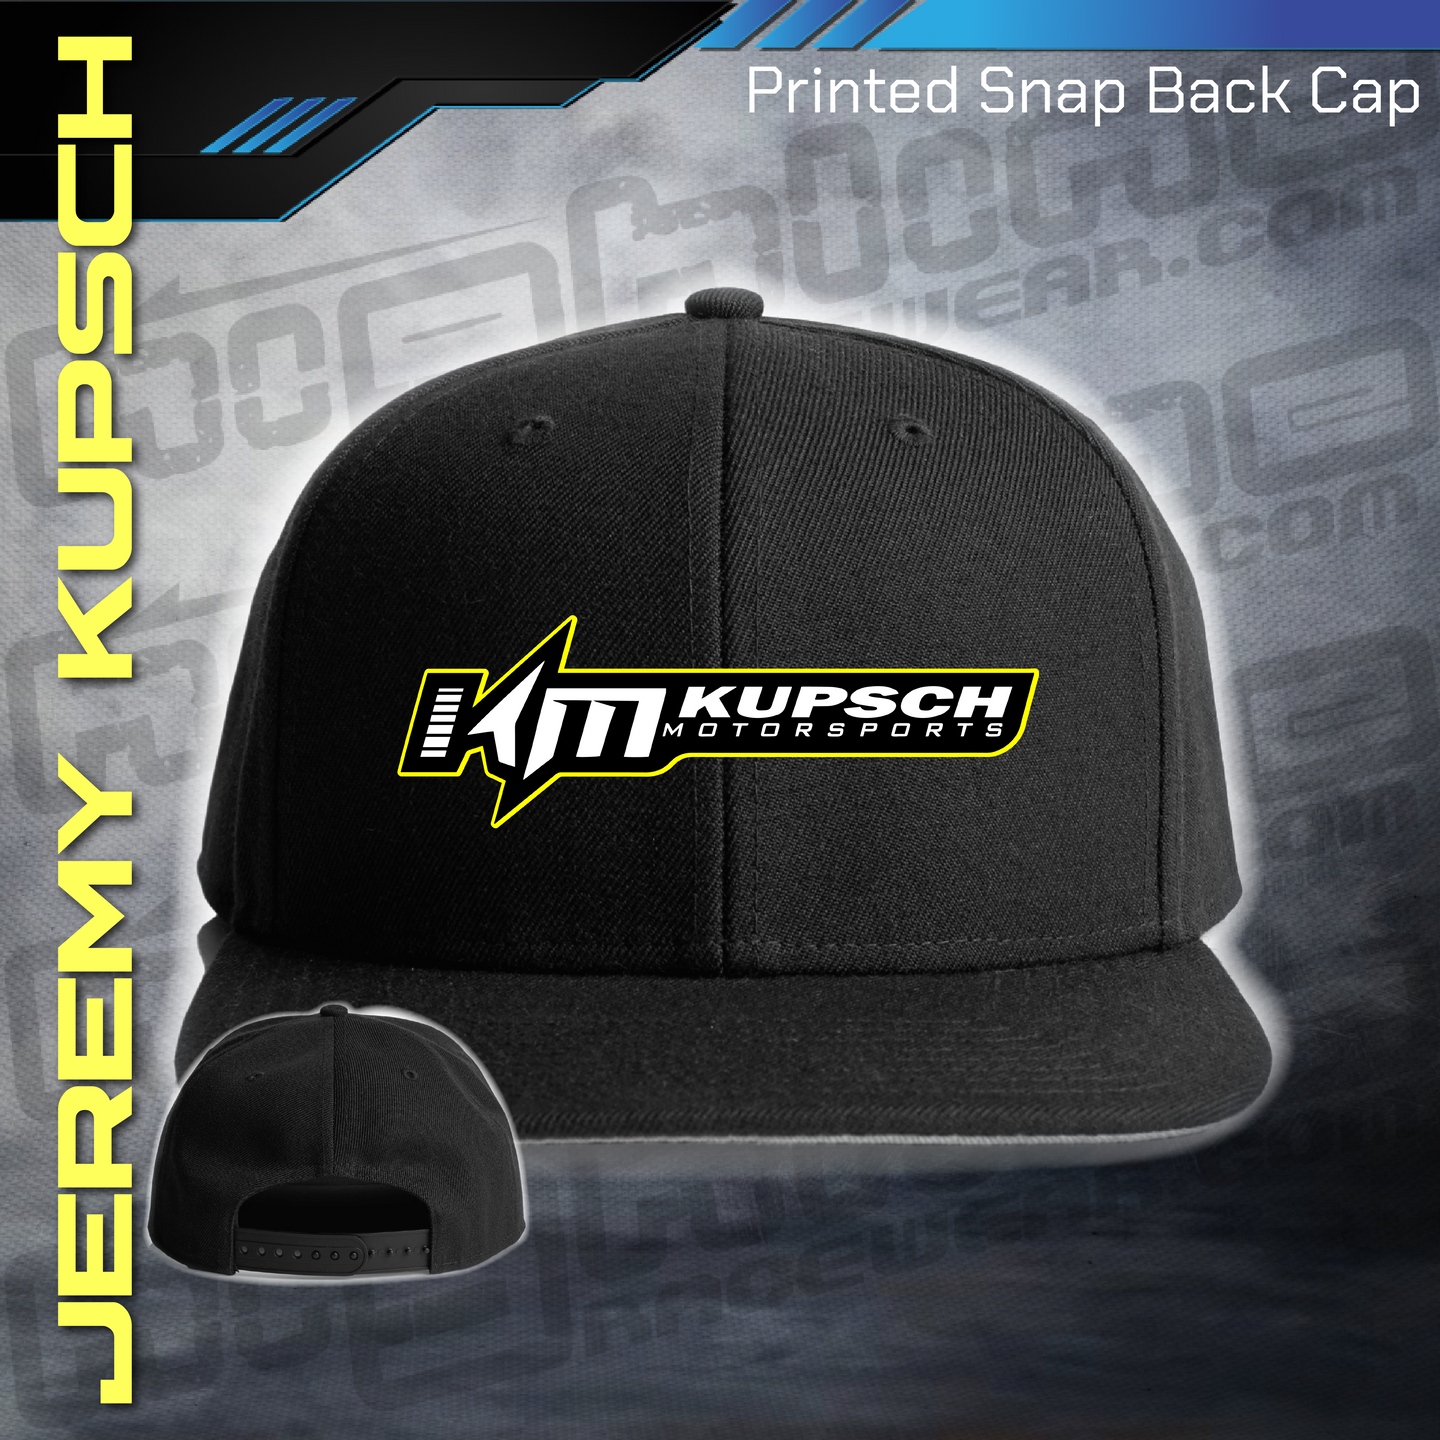 Embroidered Snap Back CAP - Jeremy Kupsch